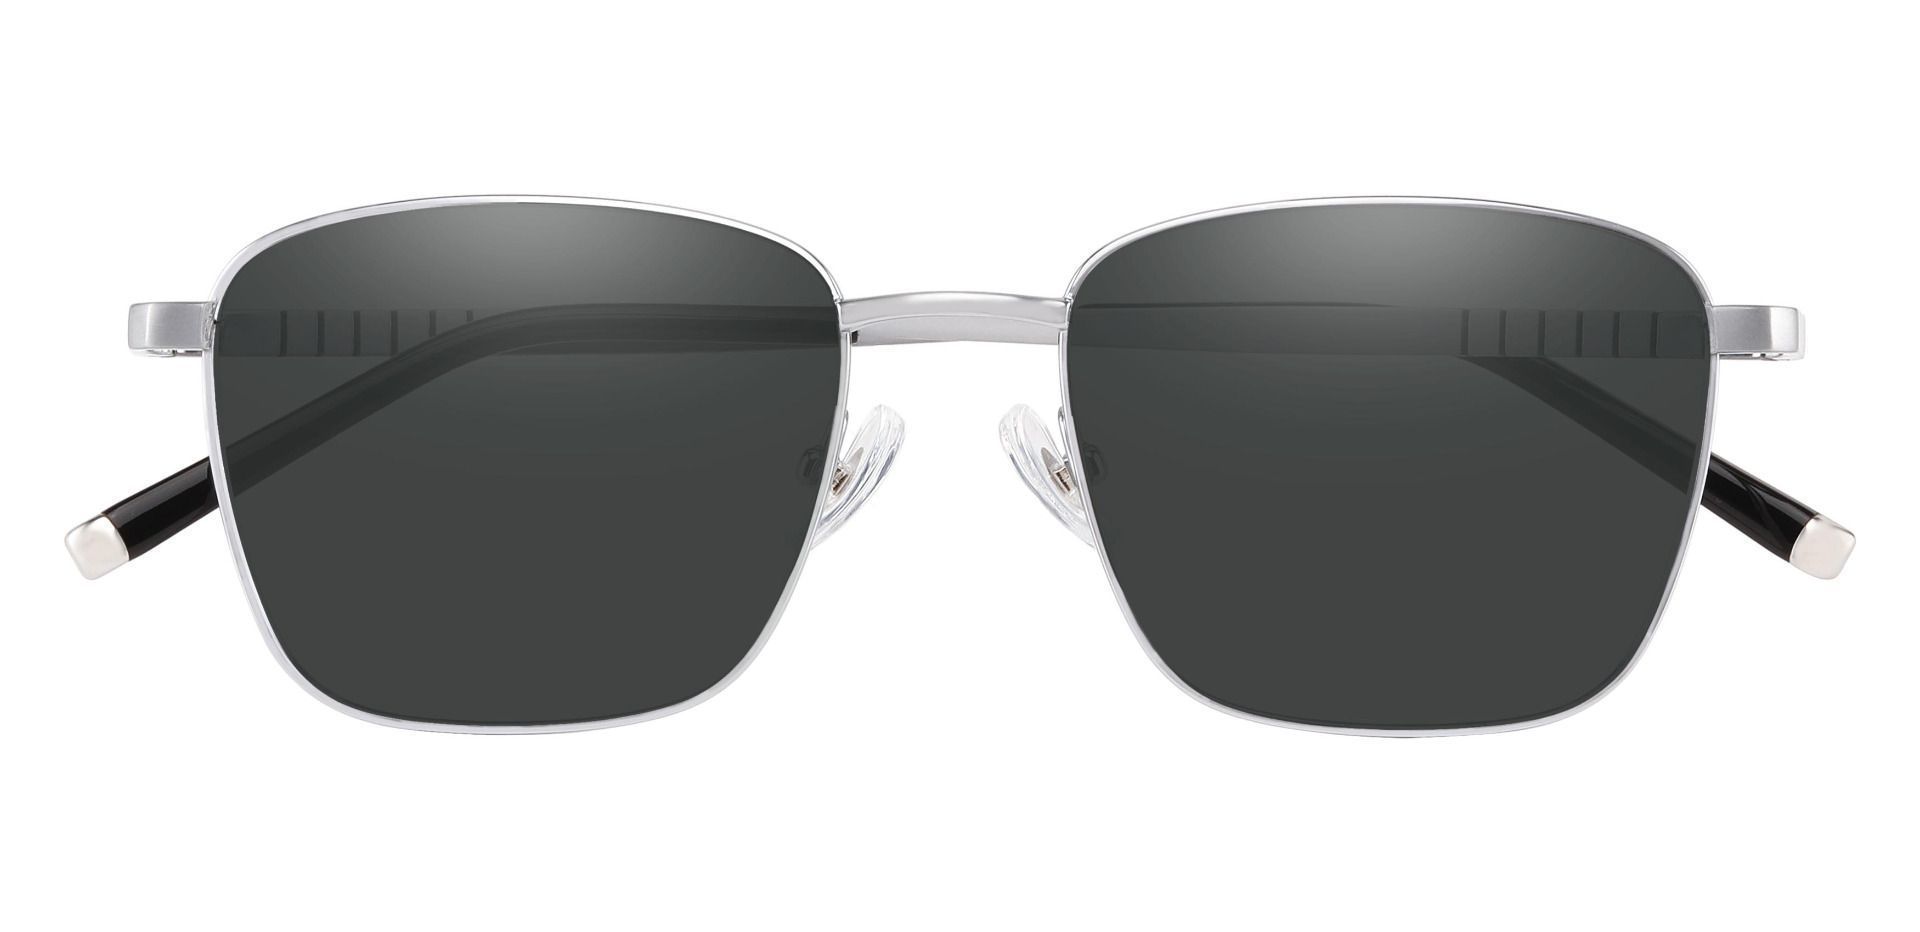 May Square Prescription Sunglasses - Silver Frame With Gray Lenses